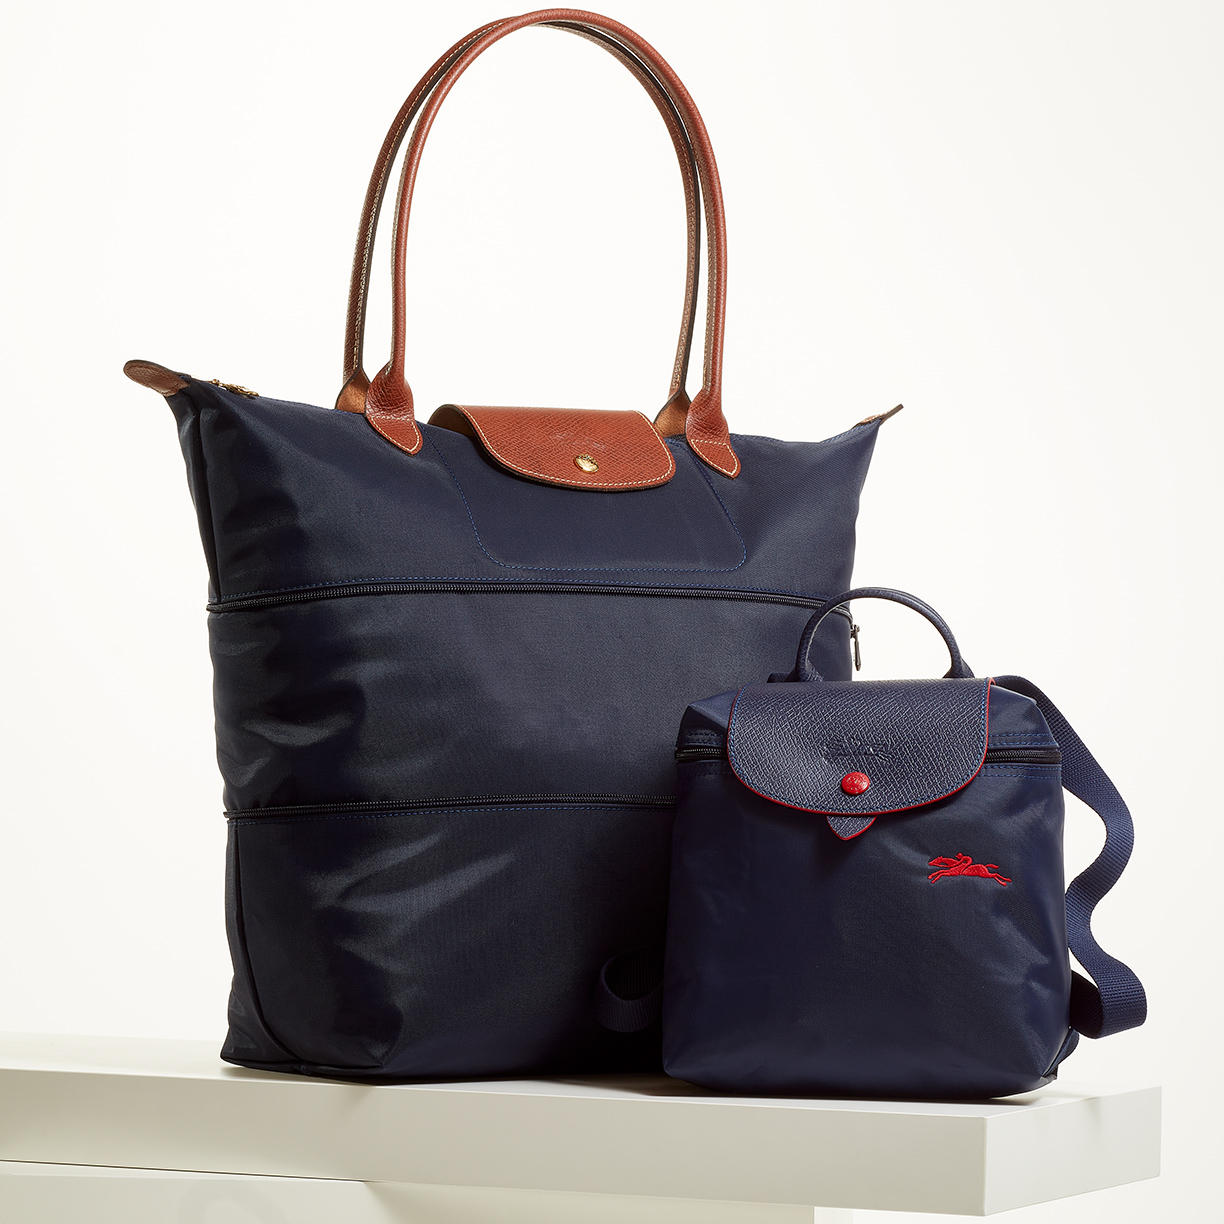 Handbag Brands We Love Feat. Longchamp